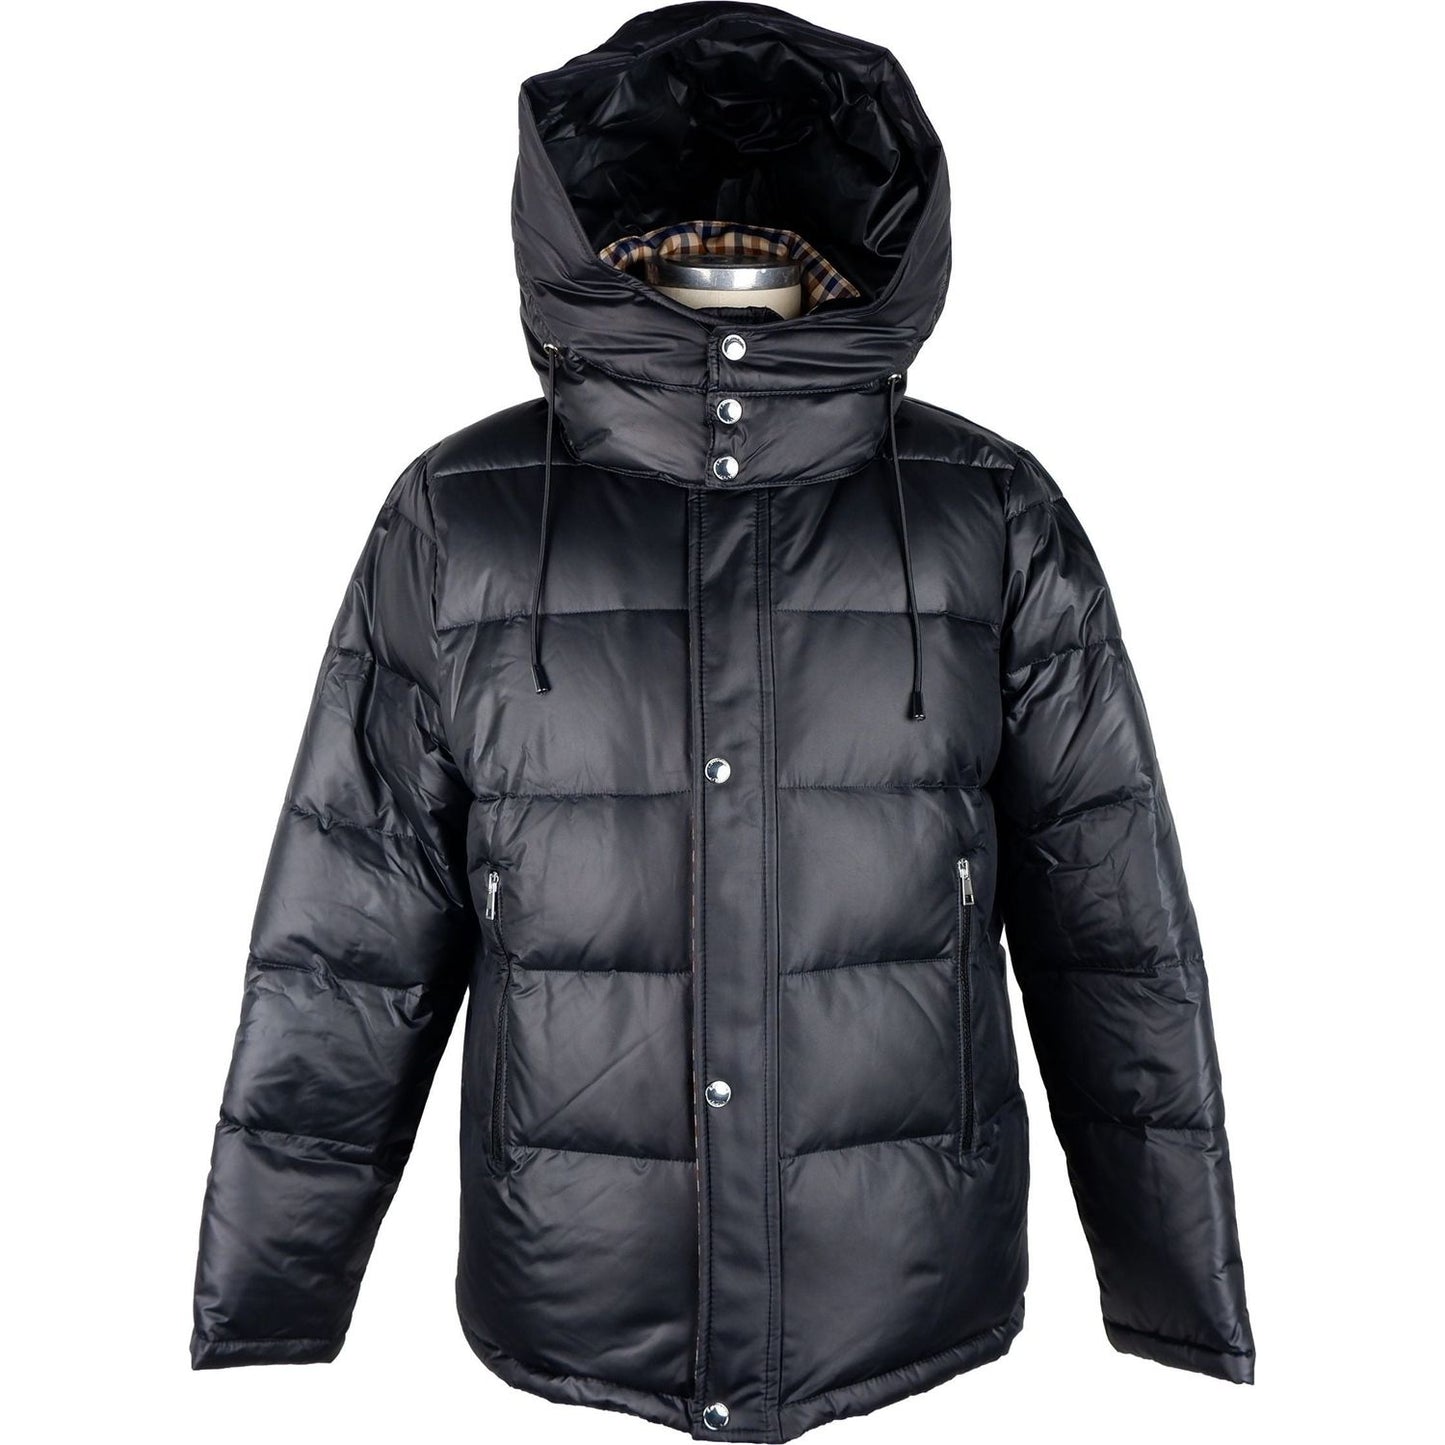 Aquascutum Elegant Black Padded Jacket with Removable Hood black-polyester-jacket-3 MAN COATS & JACKETS product-7381-1672750303-scaled-25bf6ebf-a95.jpg